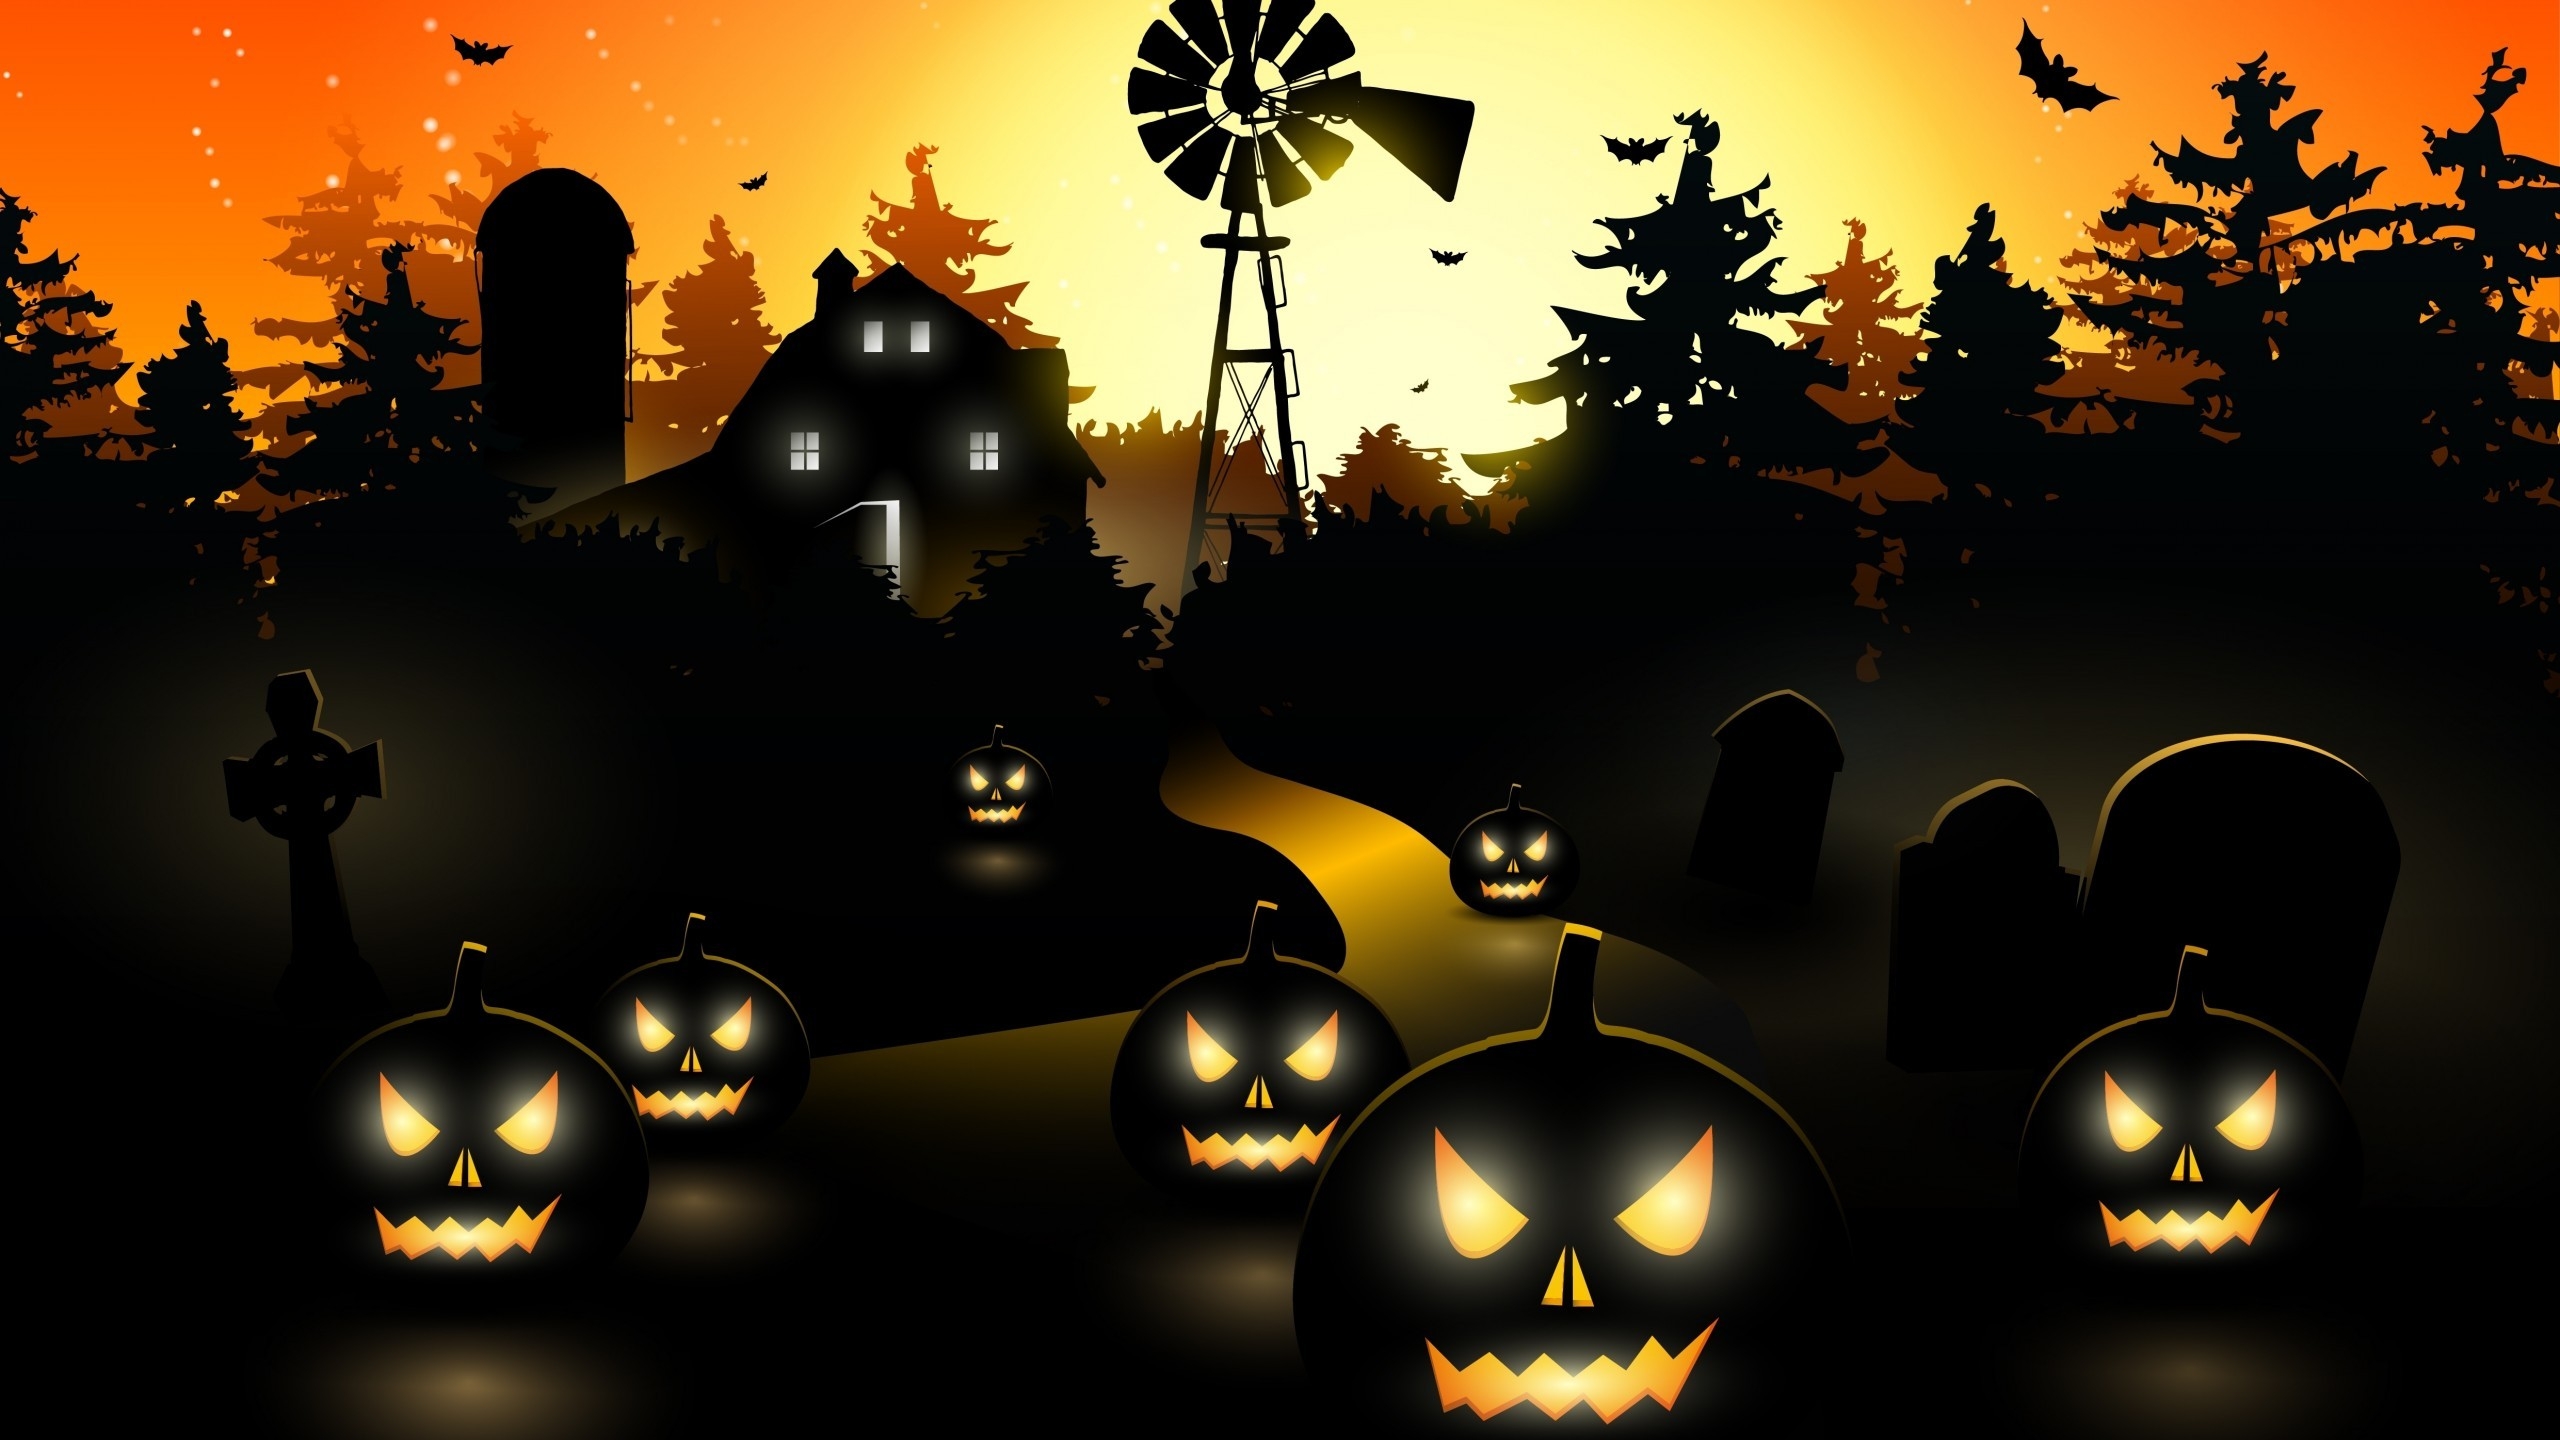 Halloween Black City for 2560x1440 HDTV resolution